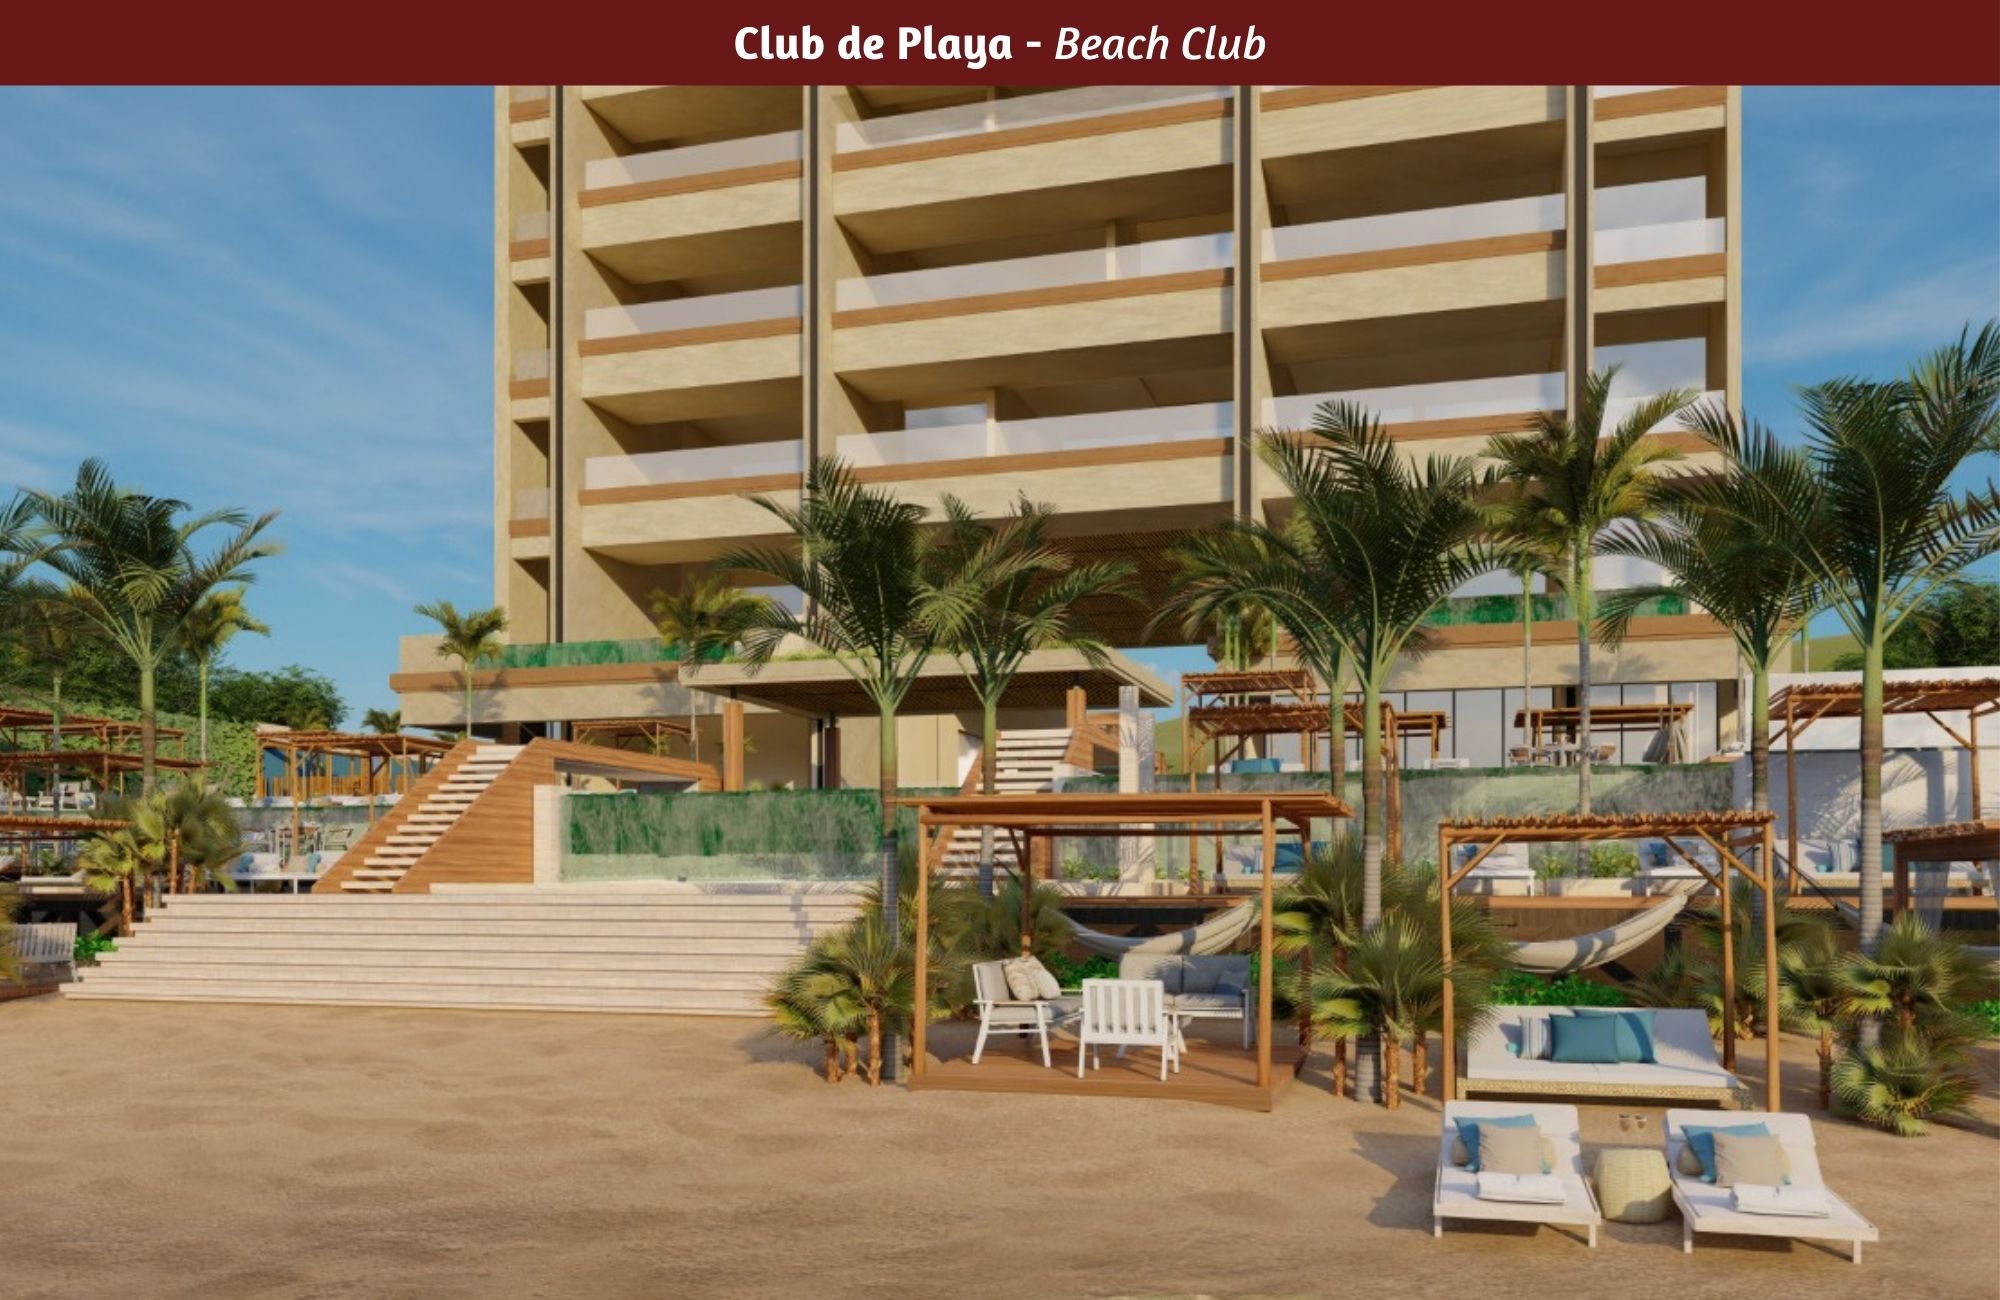 Luxury penthouse, ocean view, pool, pet-friendly, for sale Cancun.